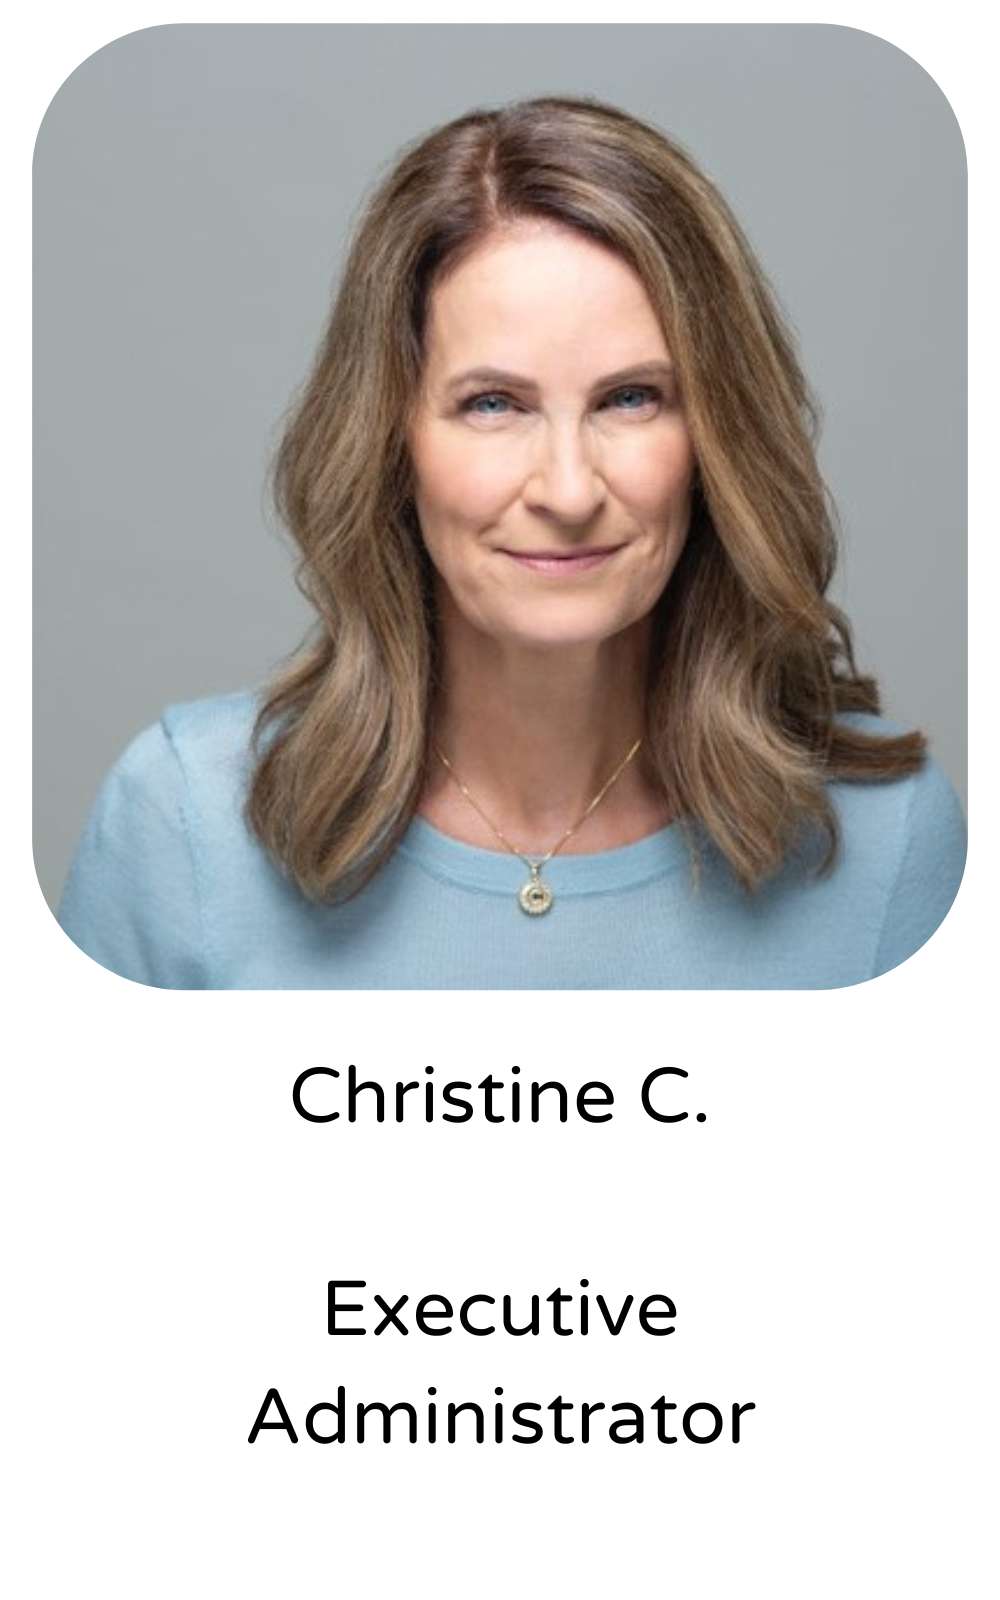 Christine C., Executive Administrator